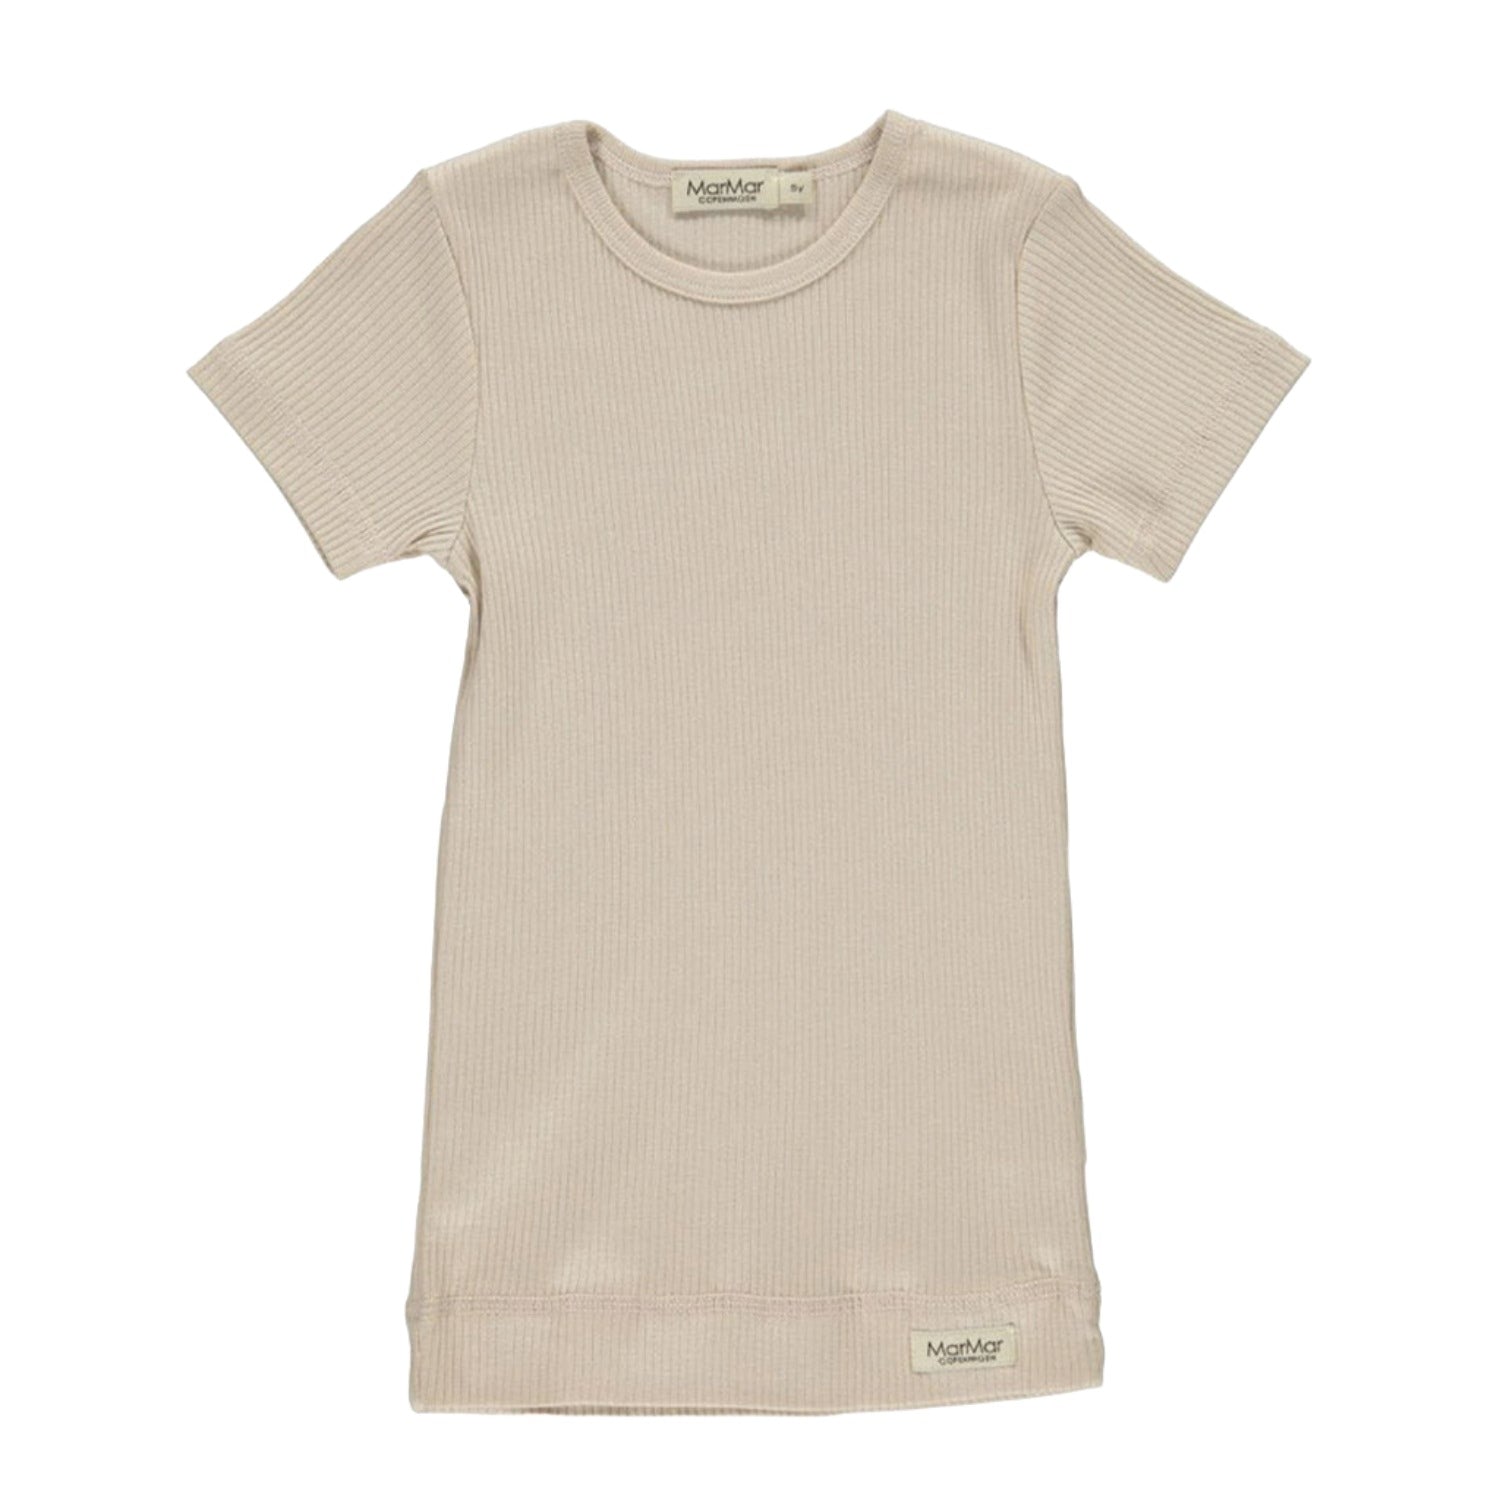 An image of Kids Short Sleeve T-shirt - Kids Top - Plain Tee Shirt| MarMar Copenhagen 1Y/86C...